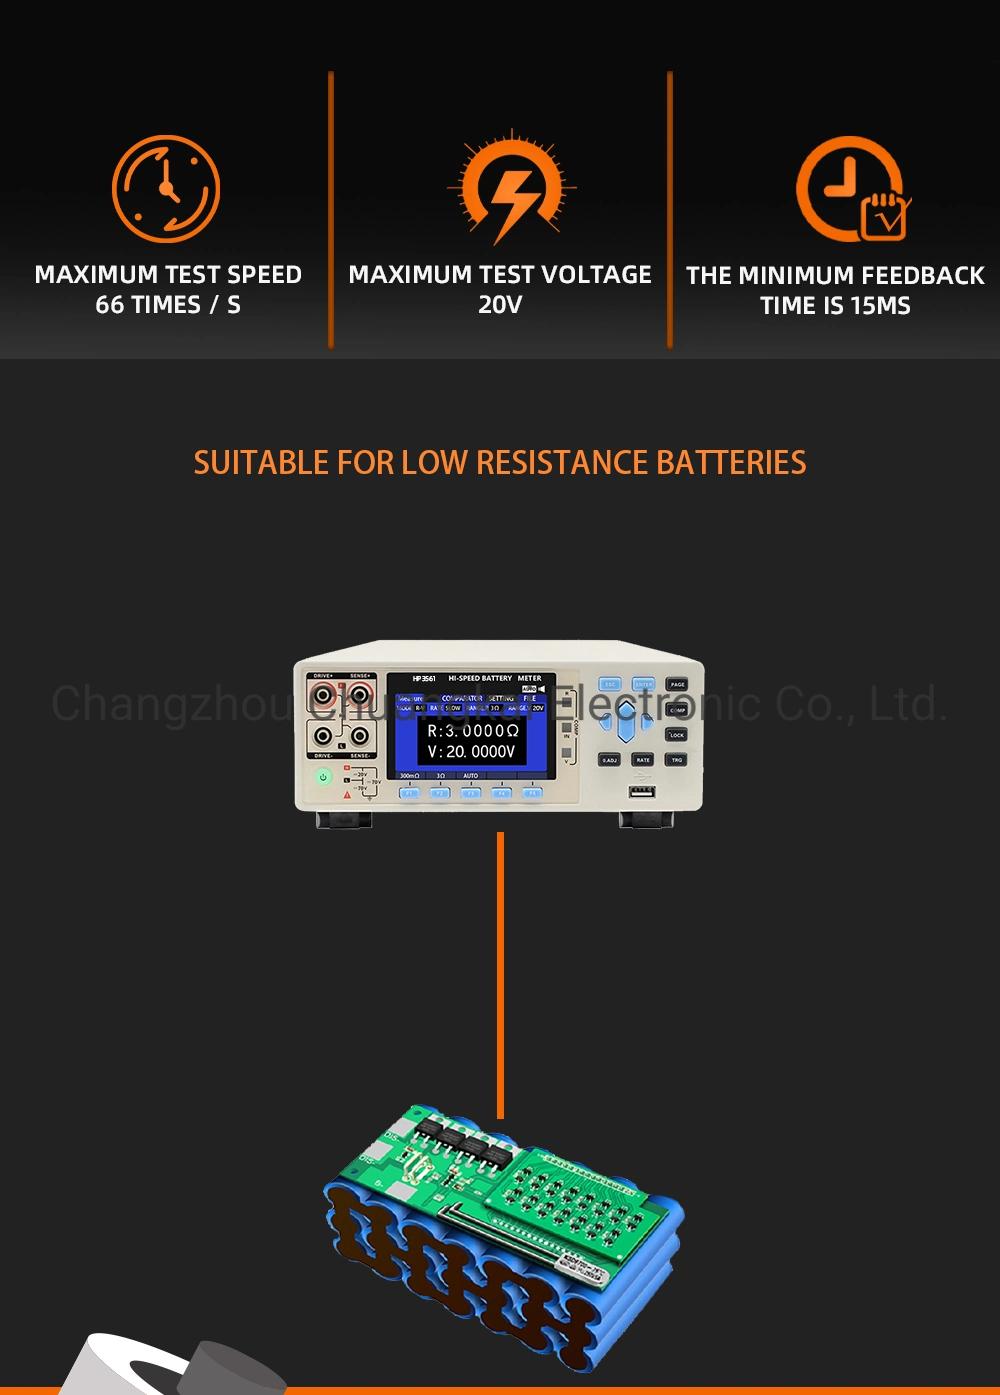 HP3561-12h Multi-Channel Car Battery CCA Tester Car Voltage Tester